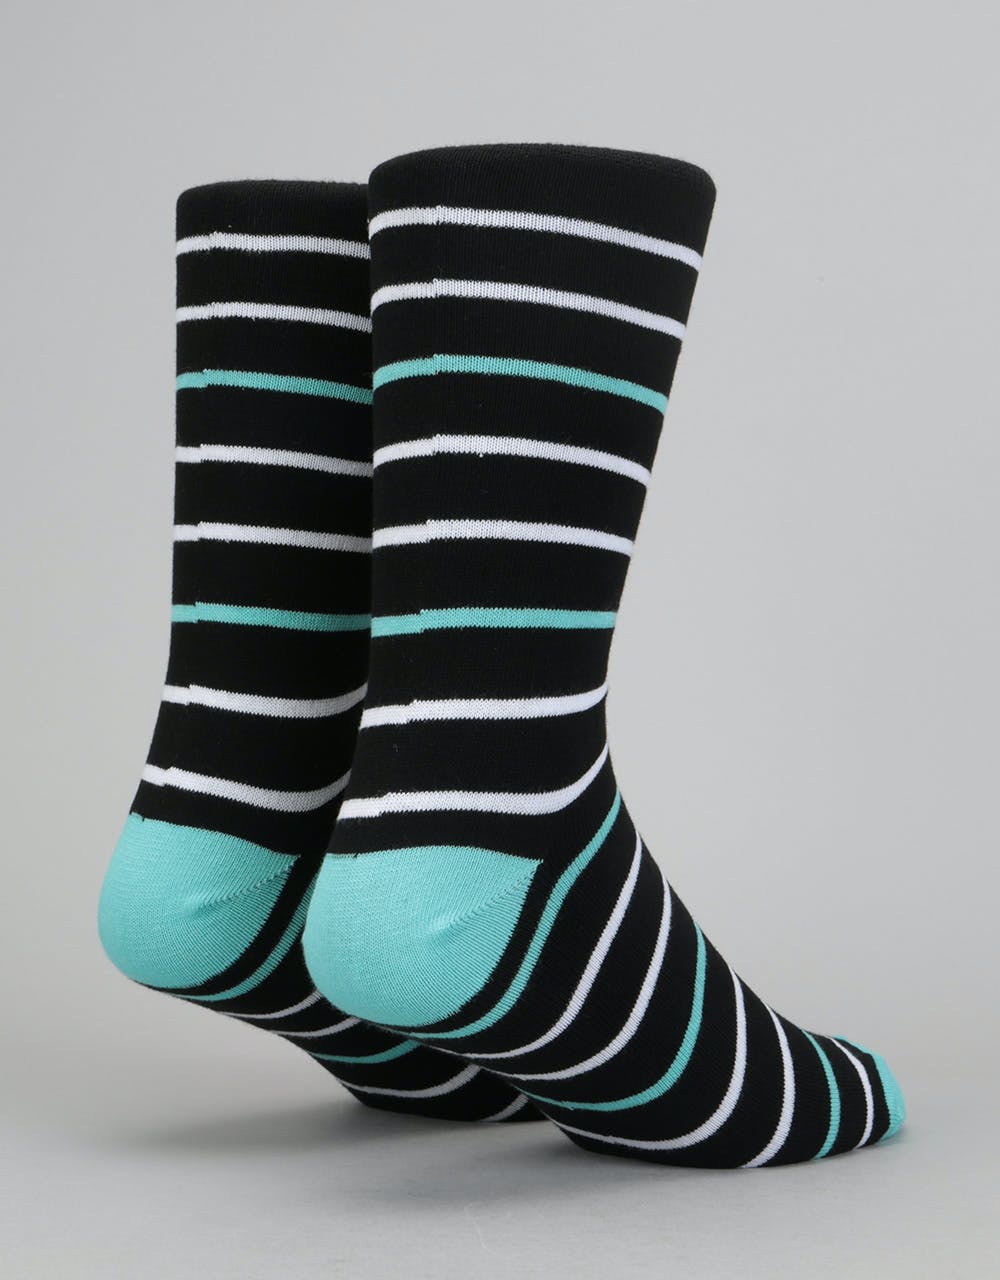 Route One Narrow Stripe Socks - Black/Blue